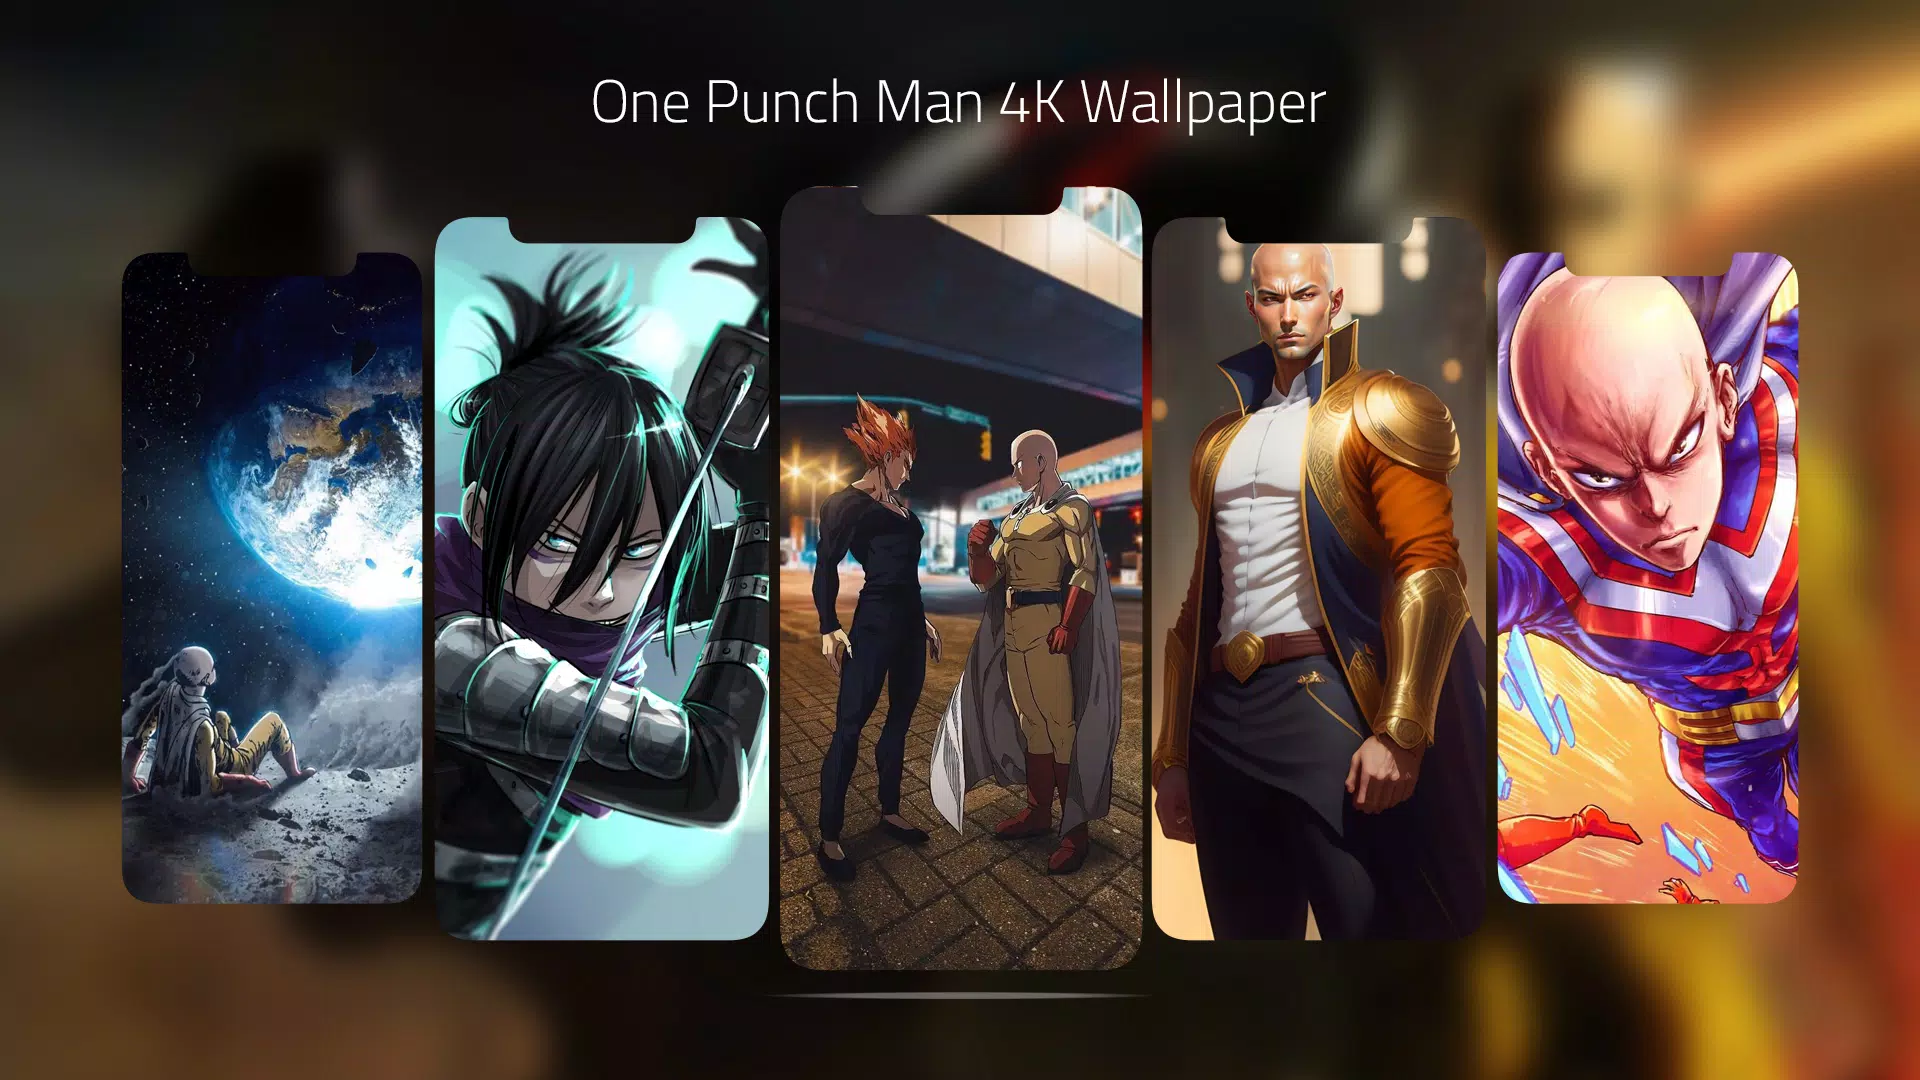 One Punch Man Wallpaper 4K